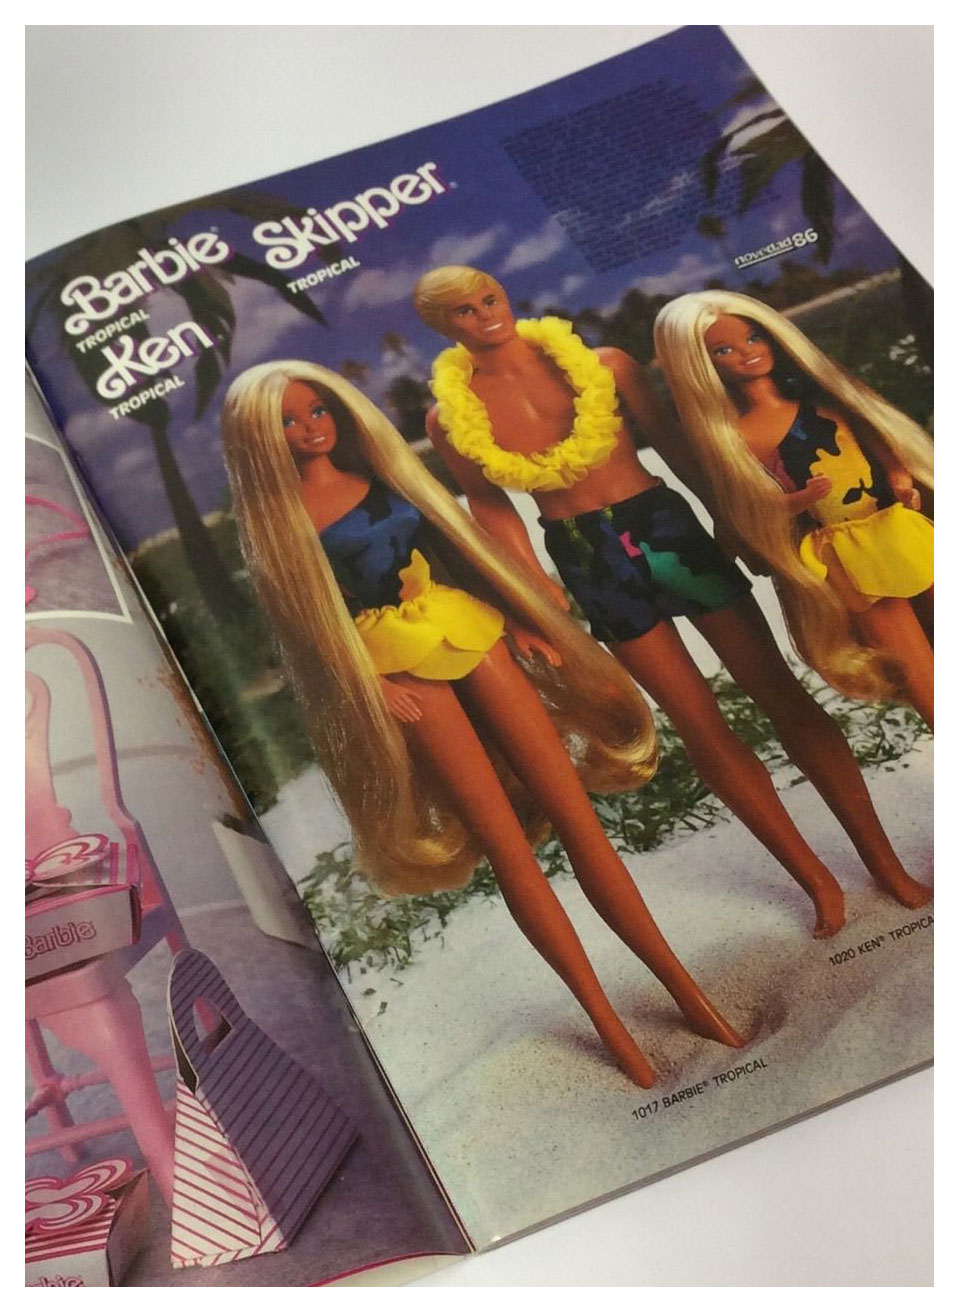 From 1986 Spanish Mattel catalogue